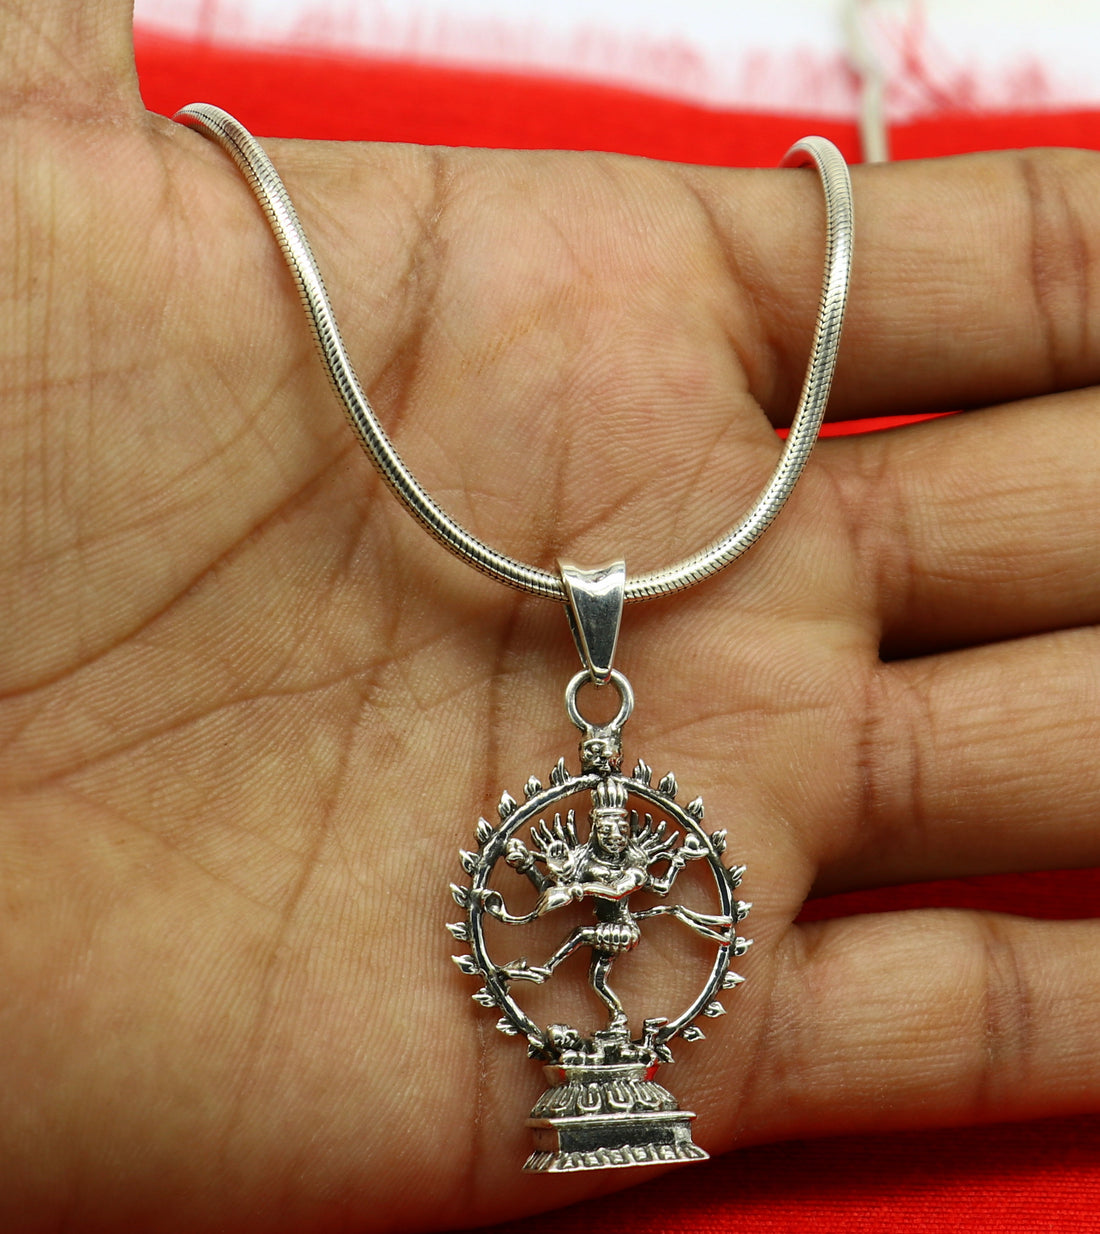 925 sterling silver handmade vintage Idol shiva Nataraaj pendant, amazing stylish unisex pendant locket personalized jewelry ssp487 - TRIBAL ORNAMENTS